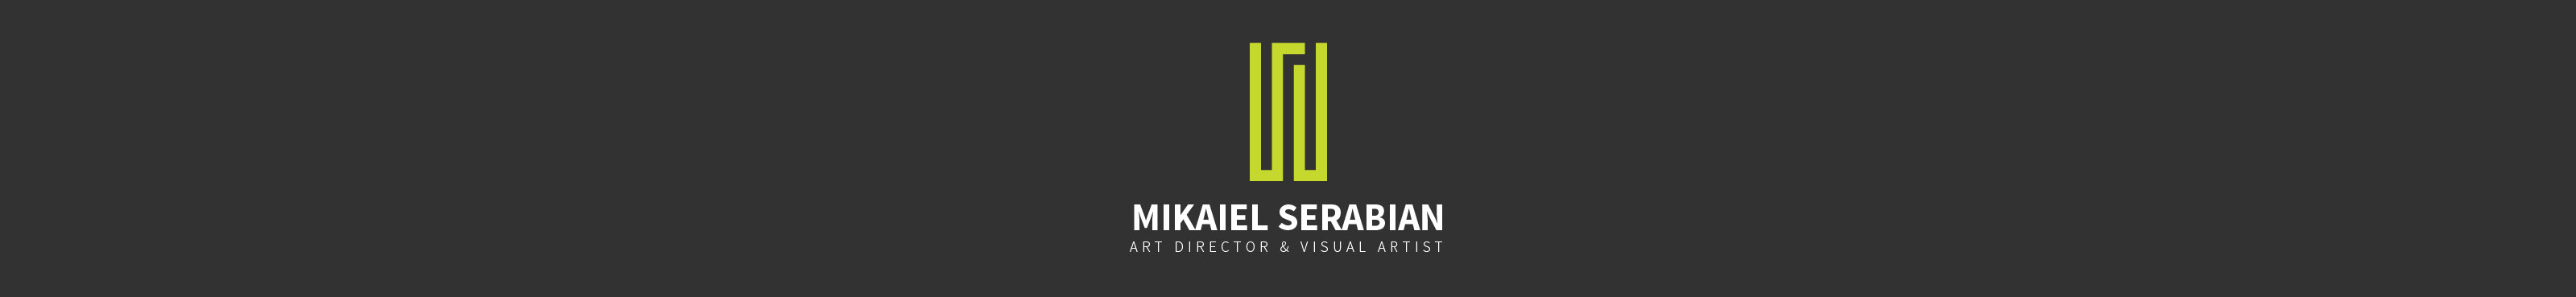 Mikaiel Serabian's profile banner